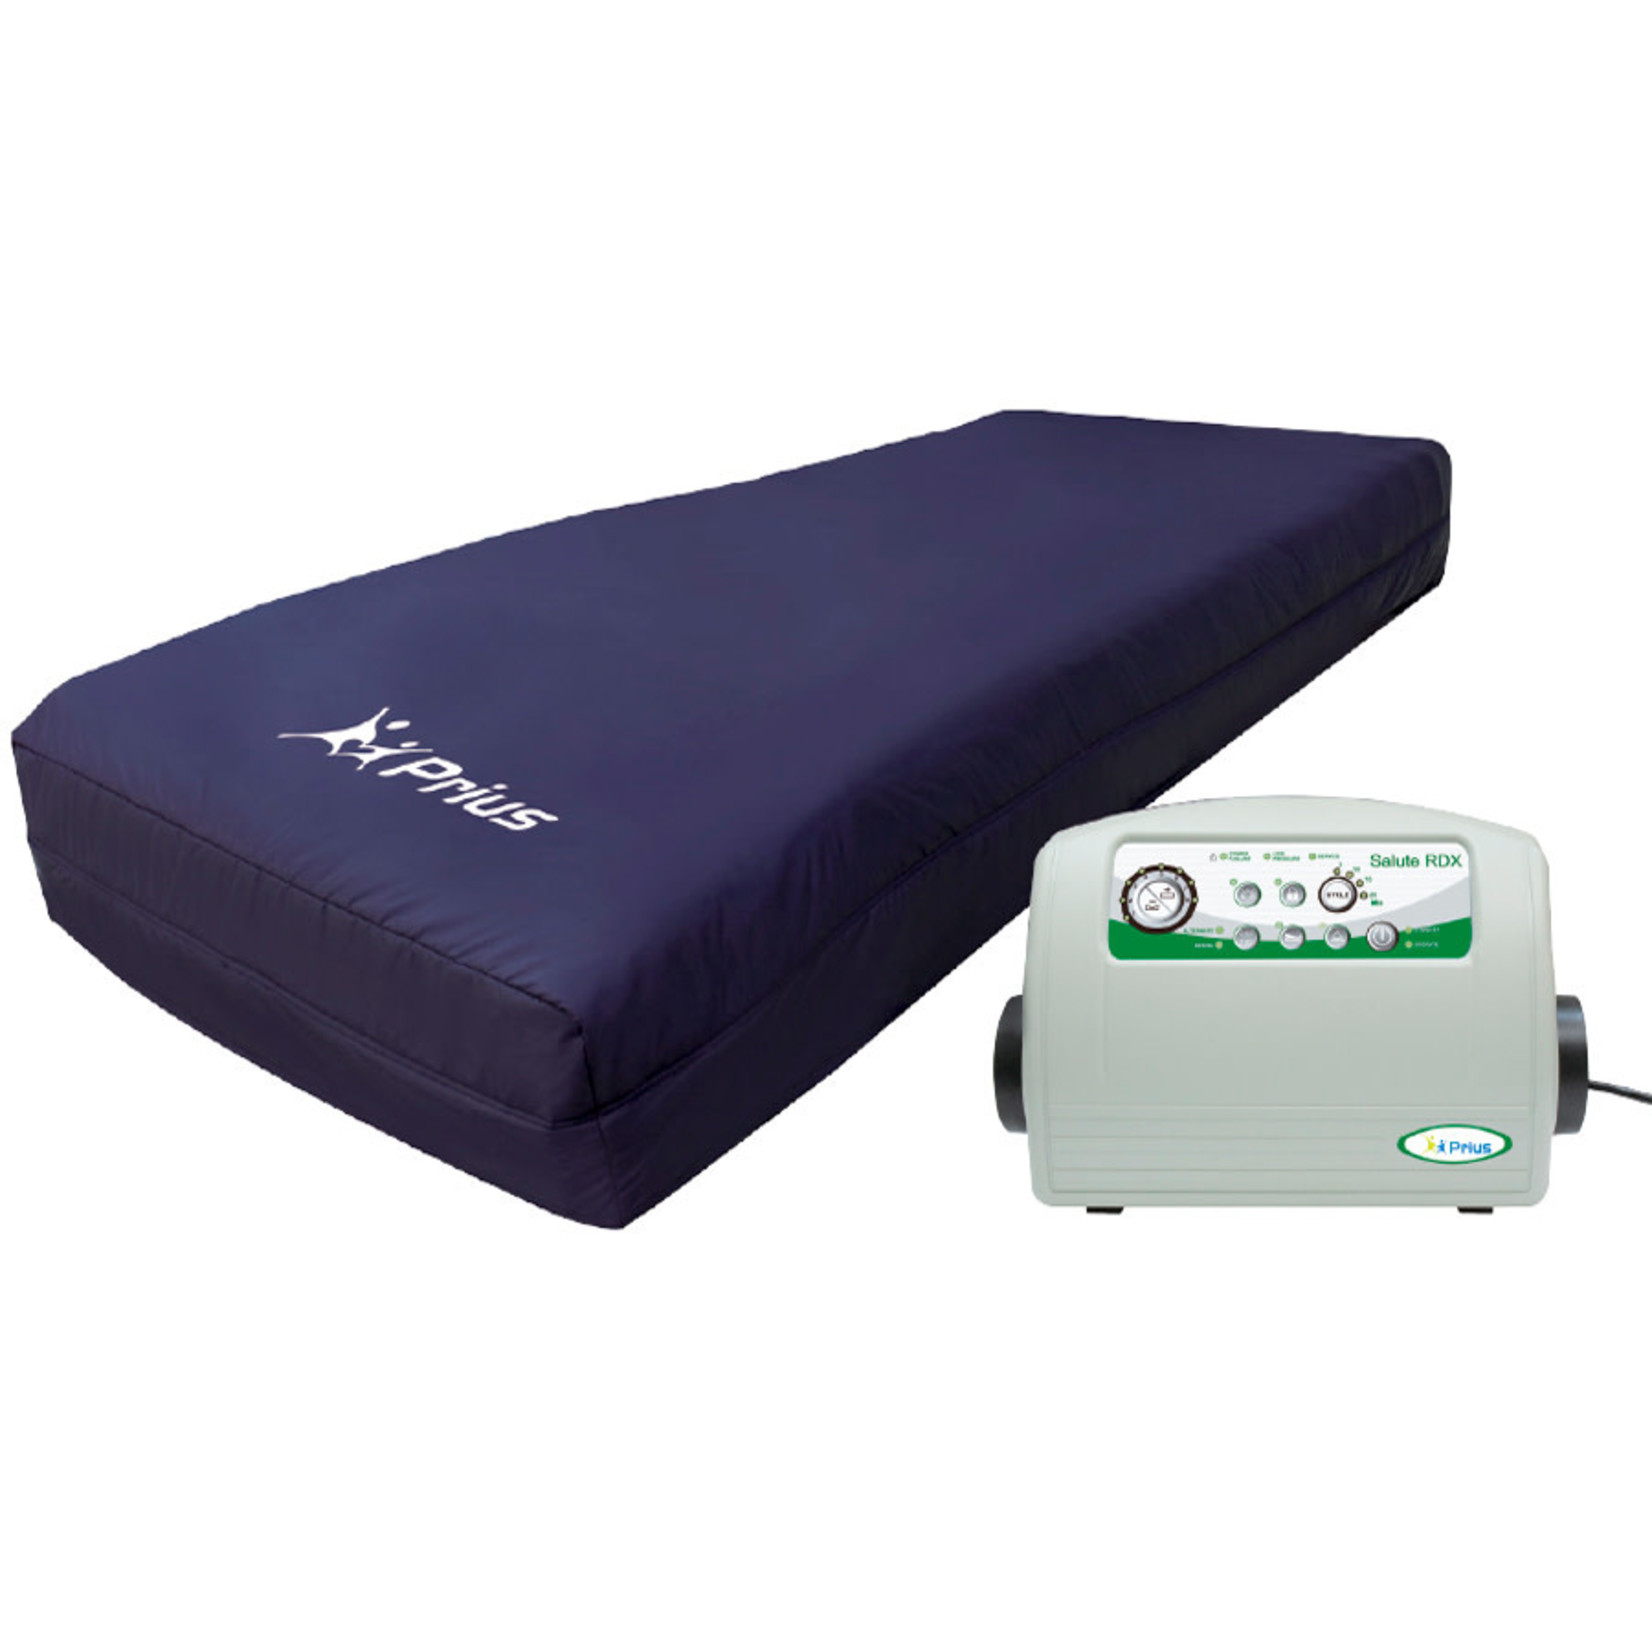 prius salute rdx mattress system